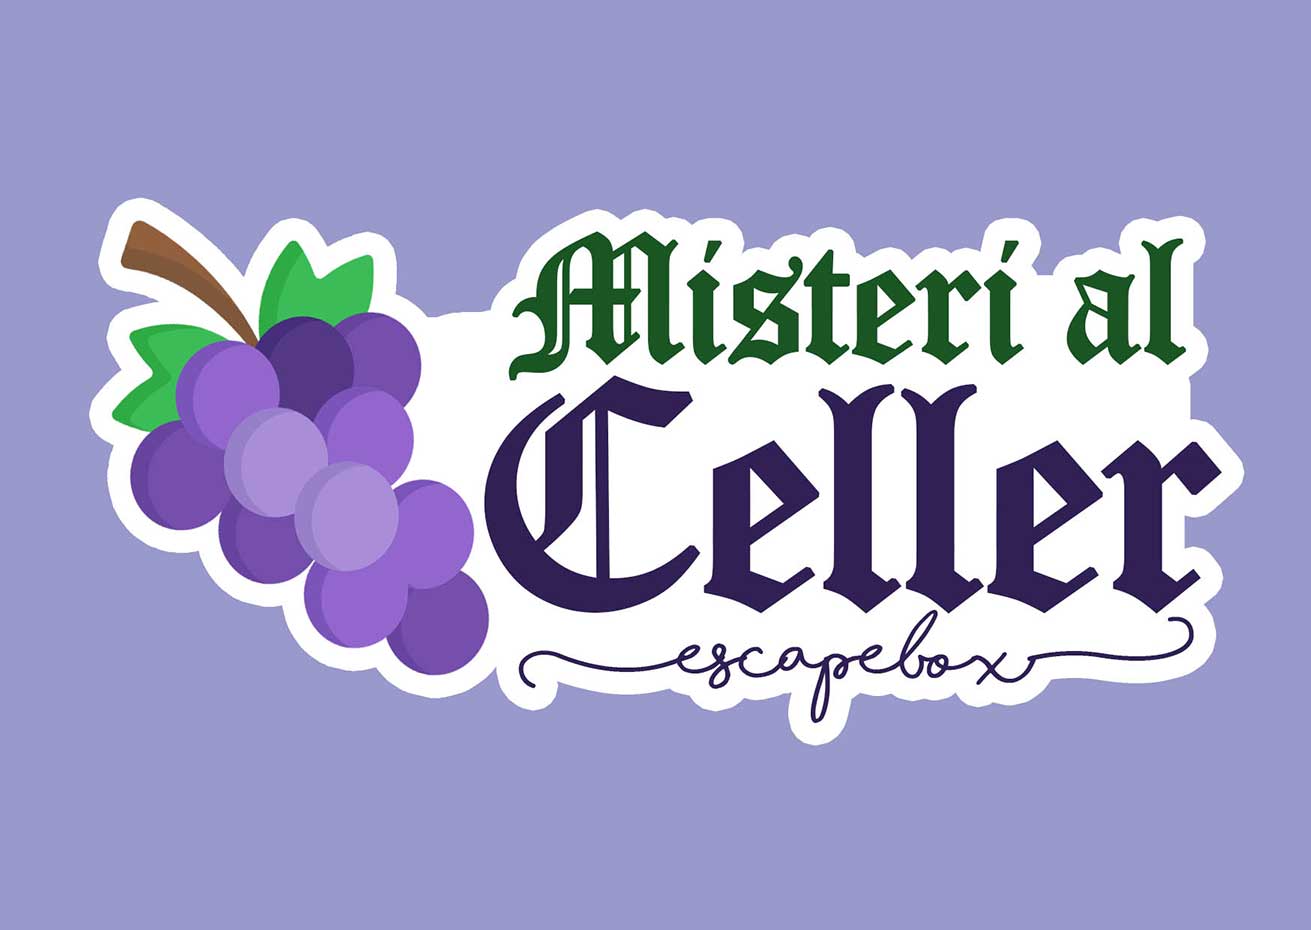 logo "Misteri al celler" escape box